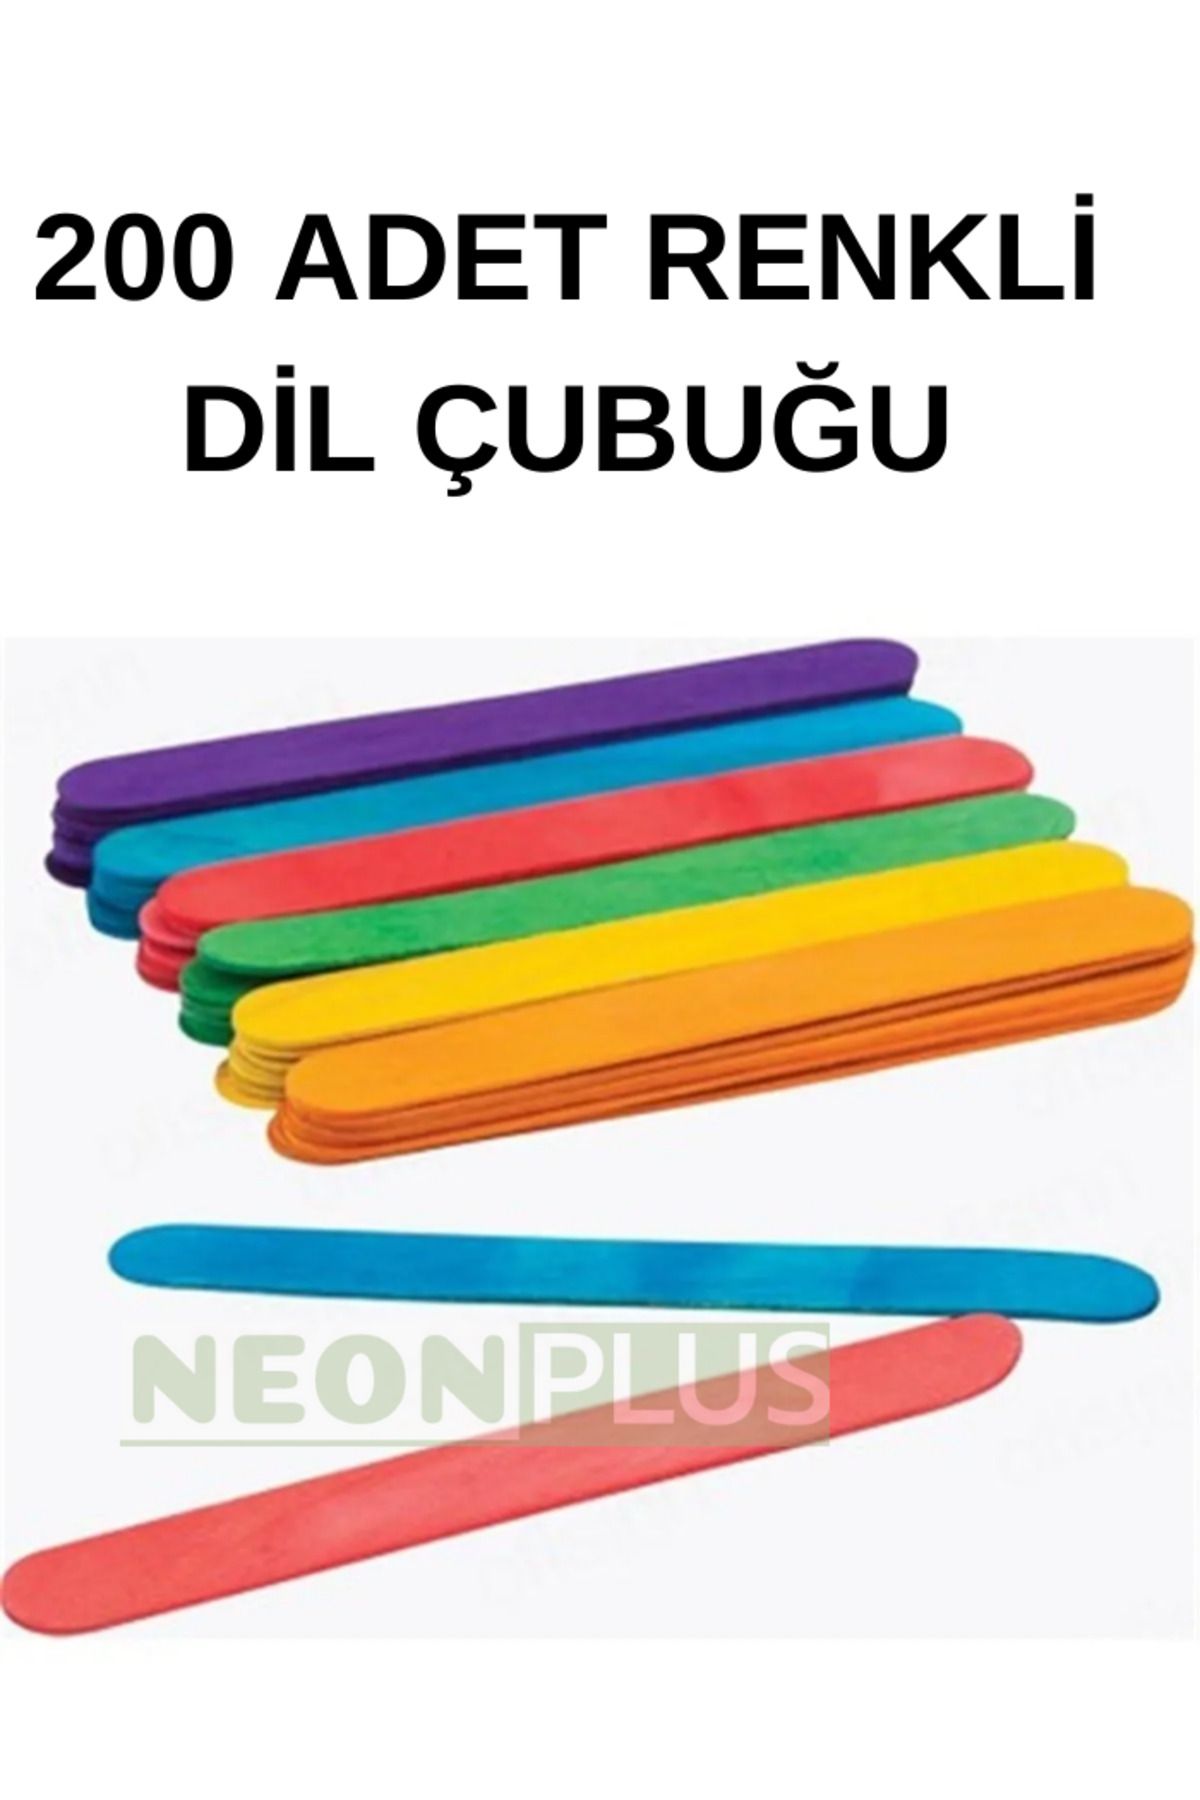 NEON PLUS 200 Adet Renkli Ahşap Büyük Geniş Dil Çubuğu Abesland Dondurma Dil Basma Çubuğu Renkli